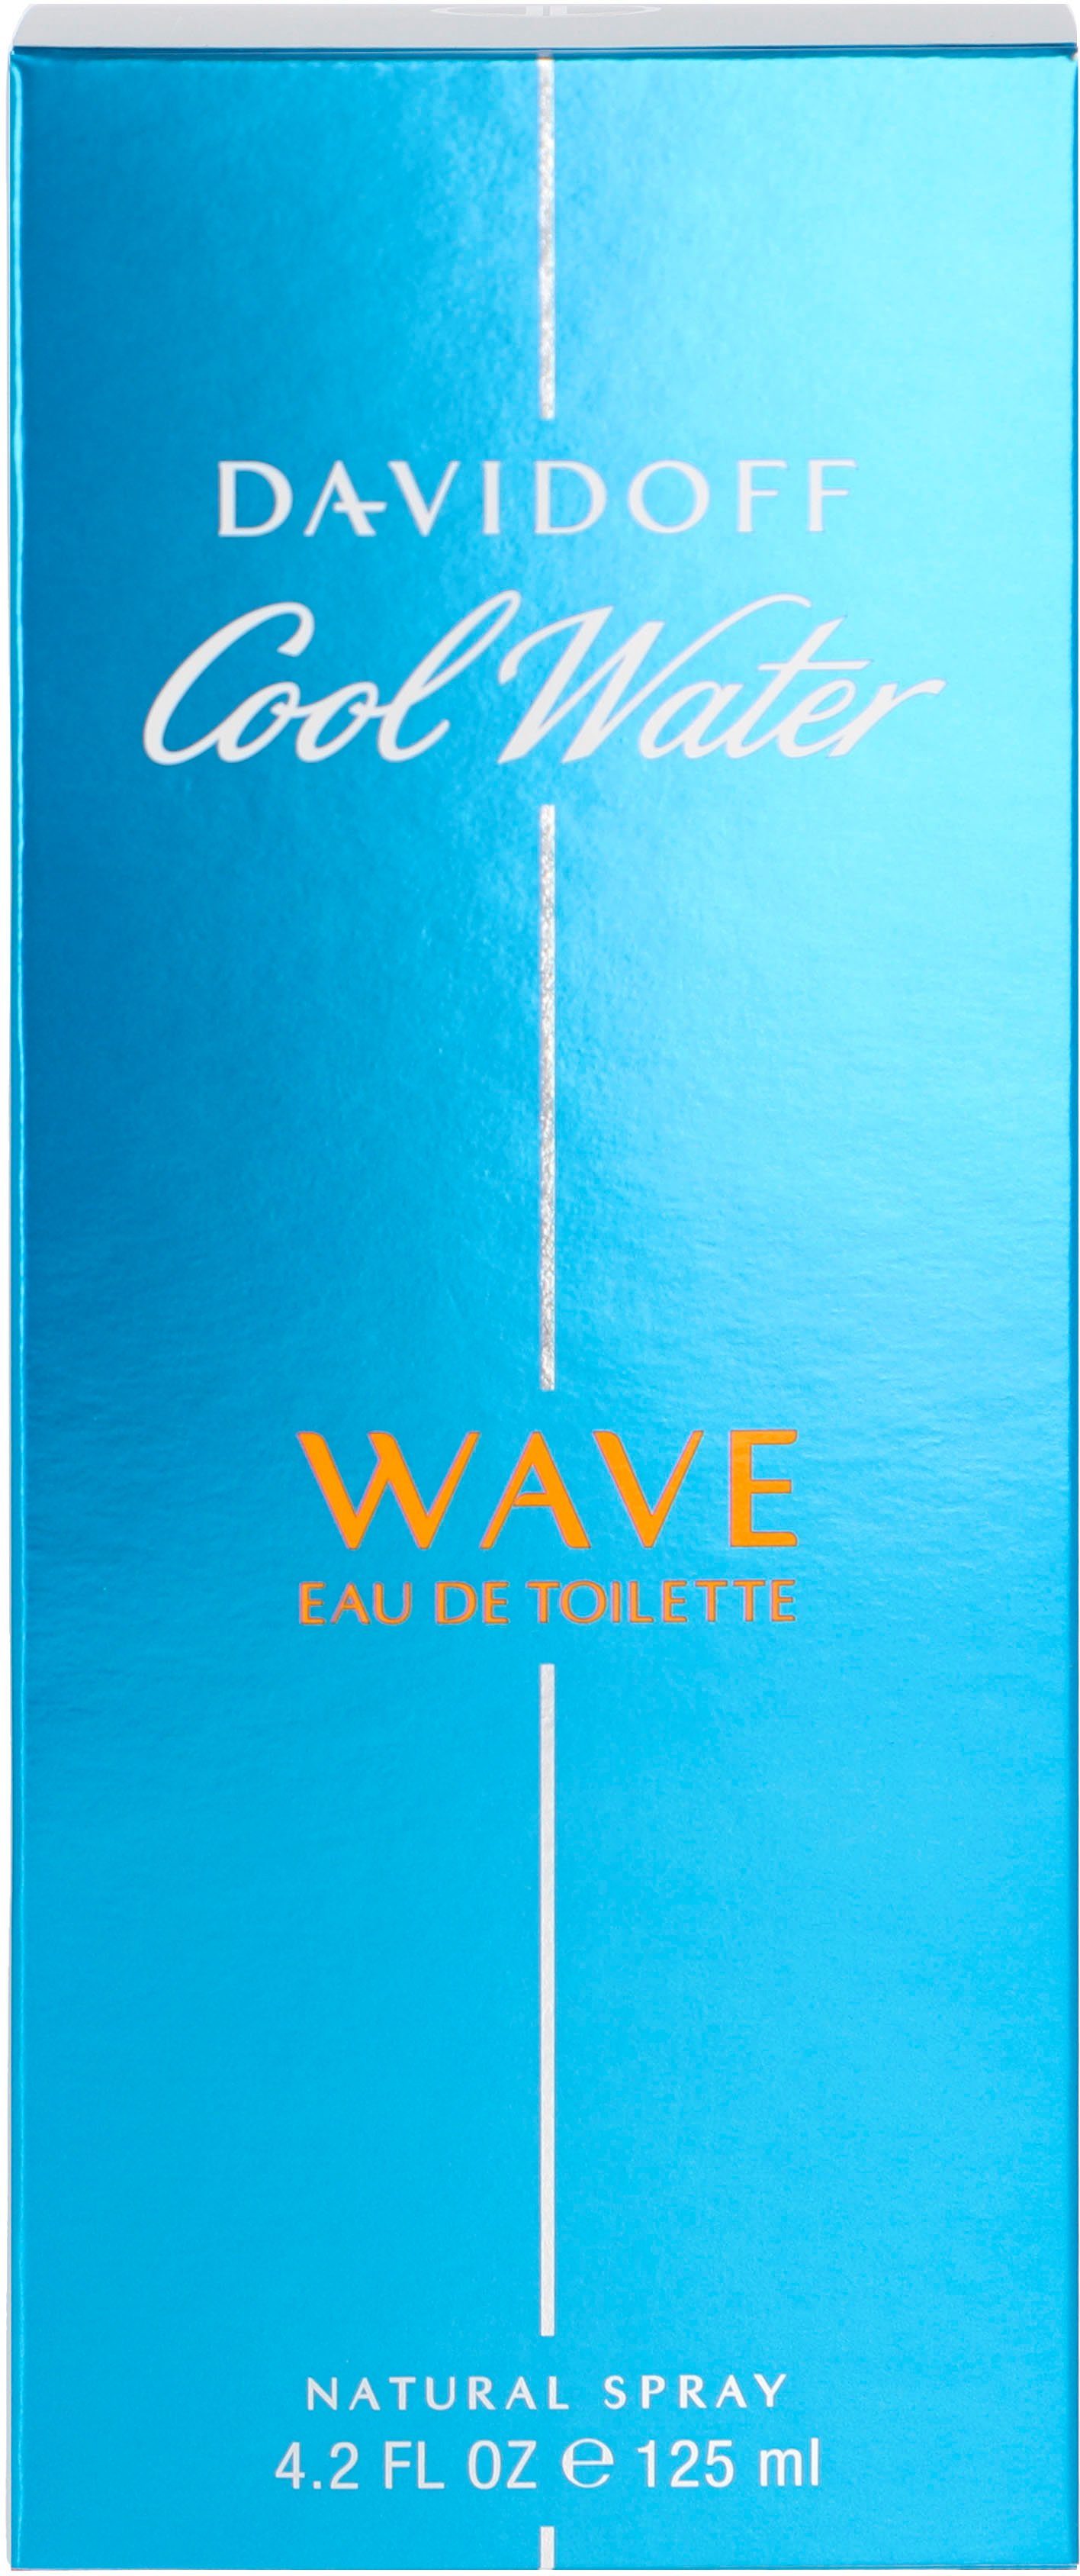 DAVIDOFF Davidoff Man Eau Water Cool de Wave Toilette